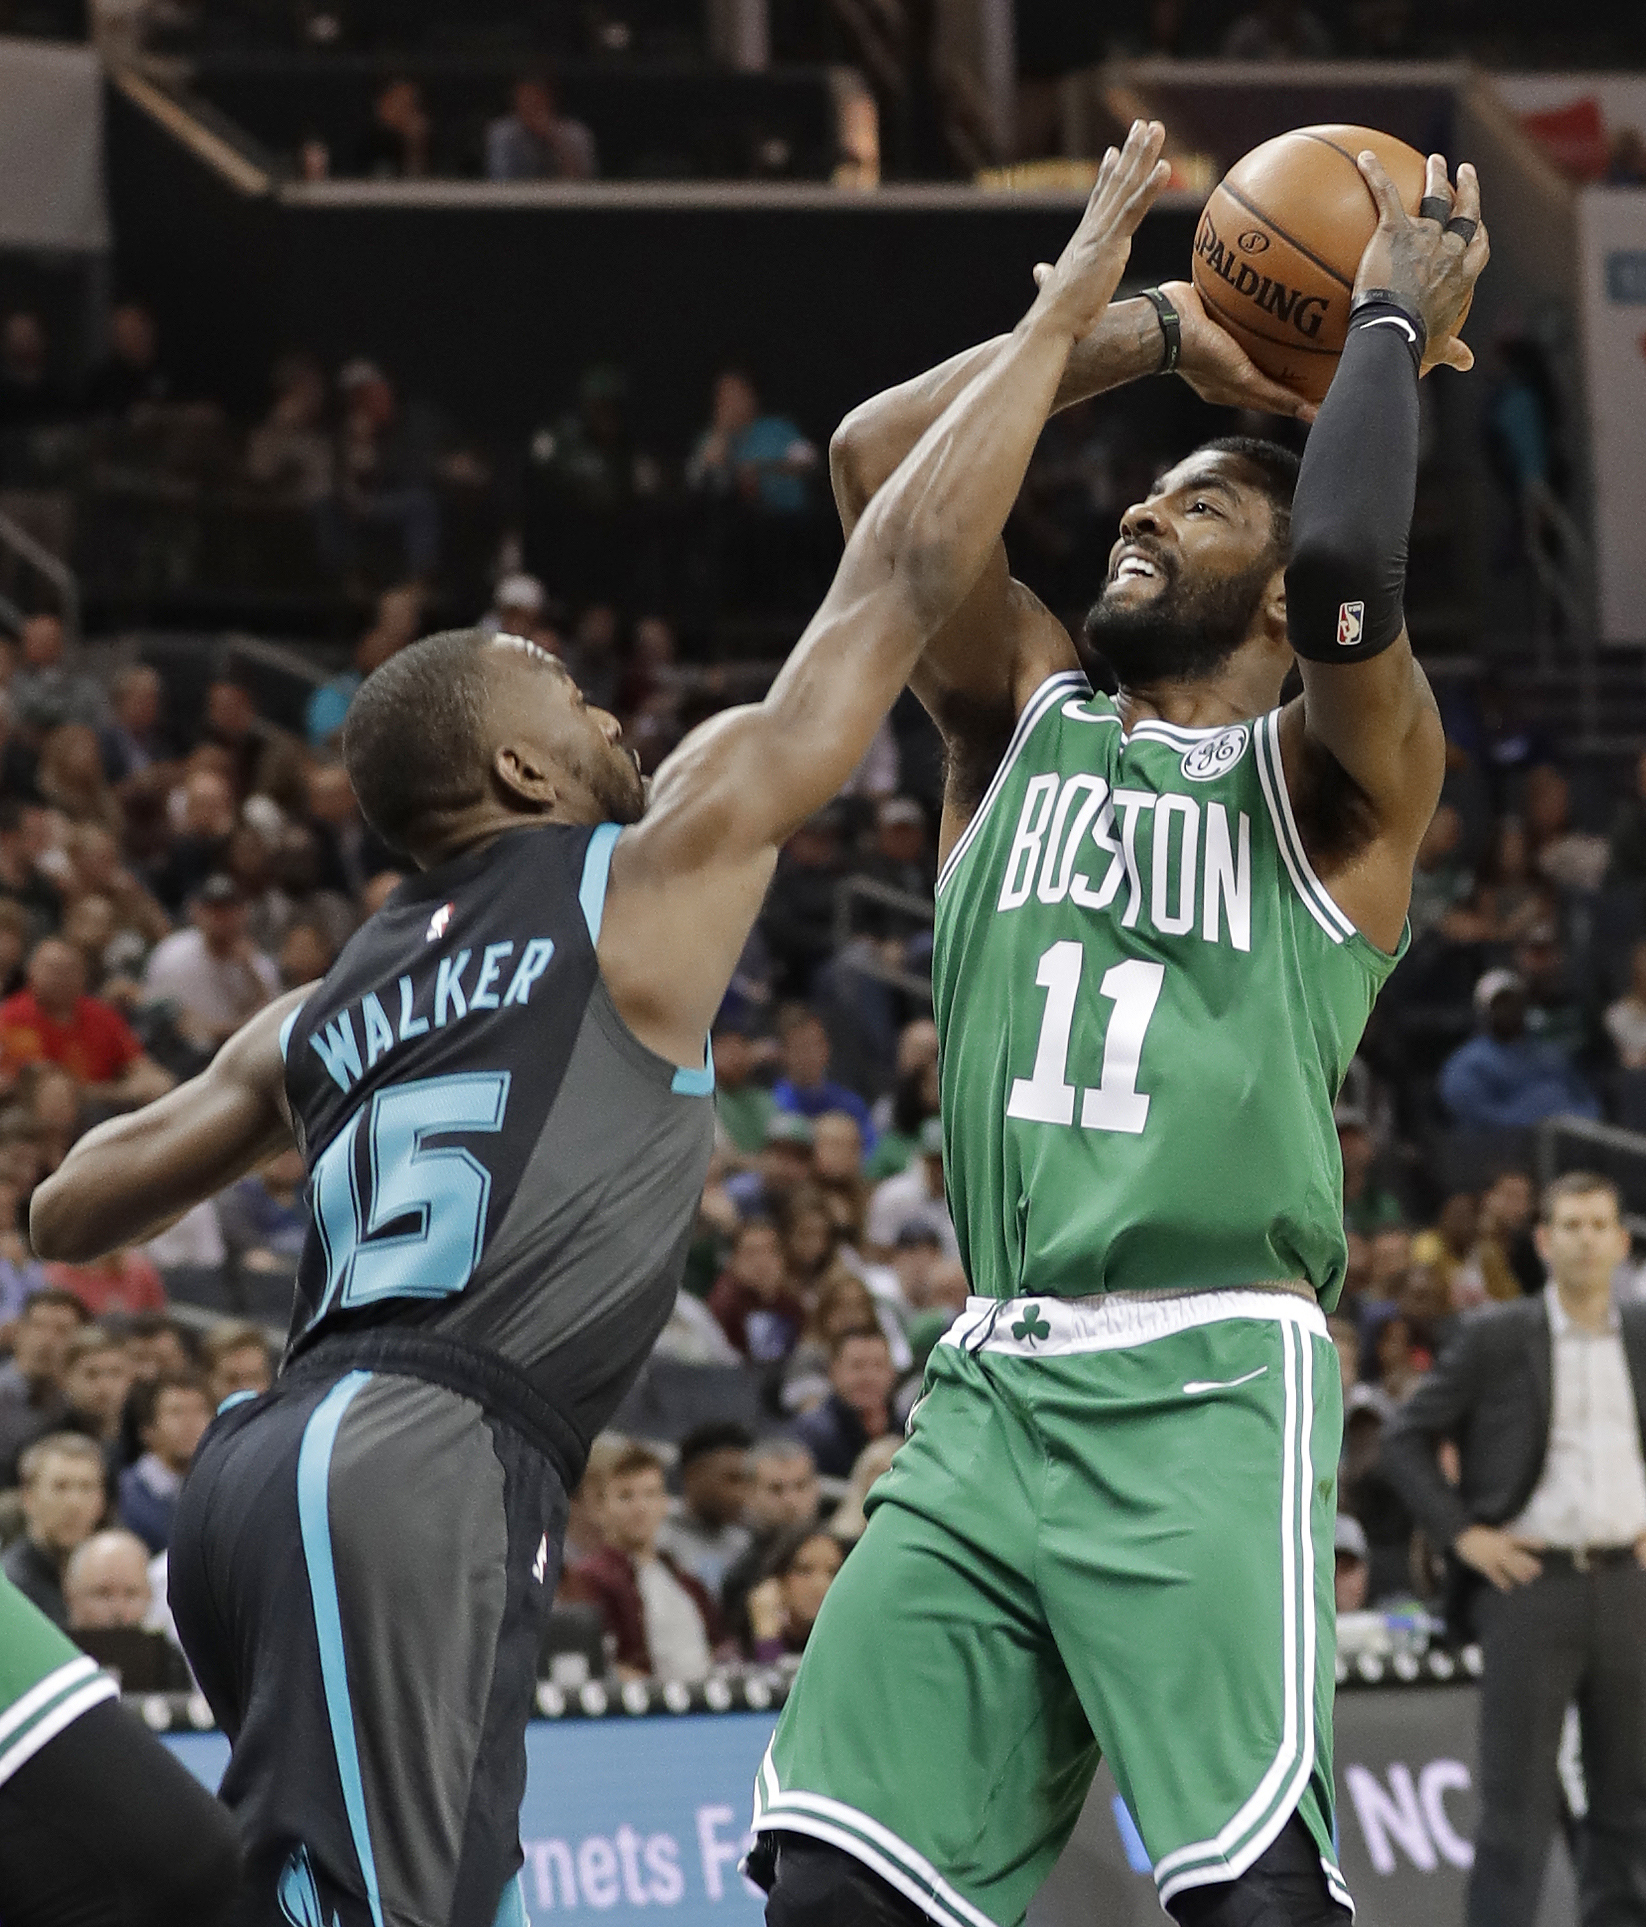 Walker new NBA scoring leader, Hornets top Celtics 117-112